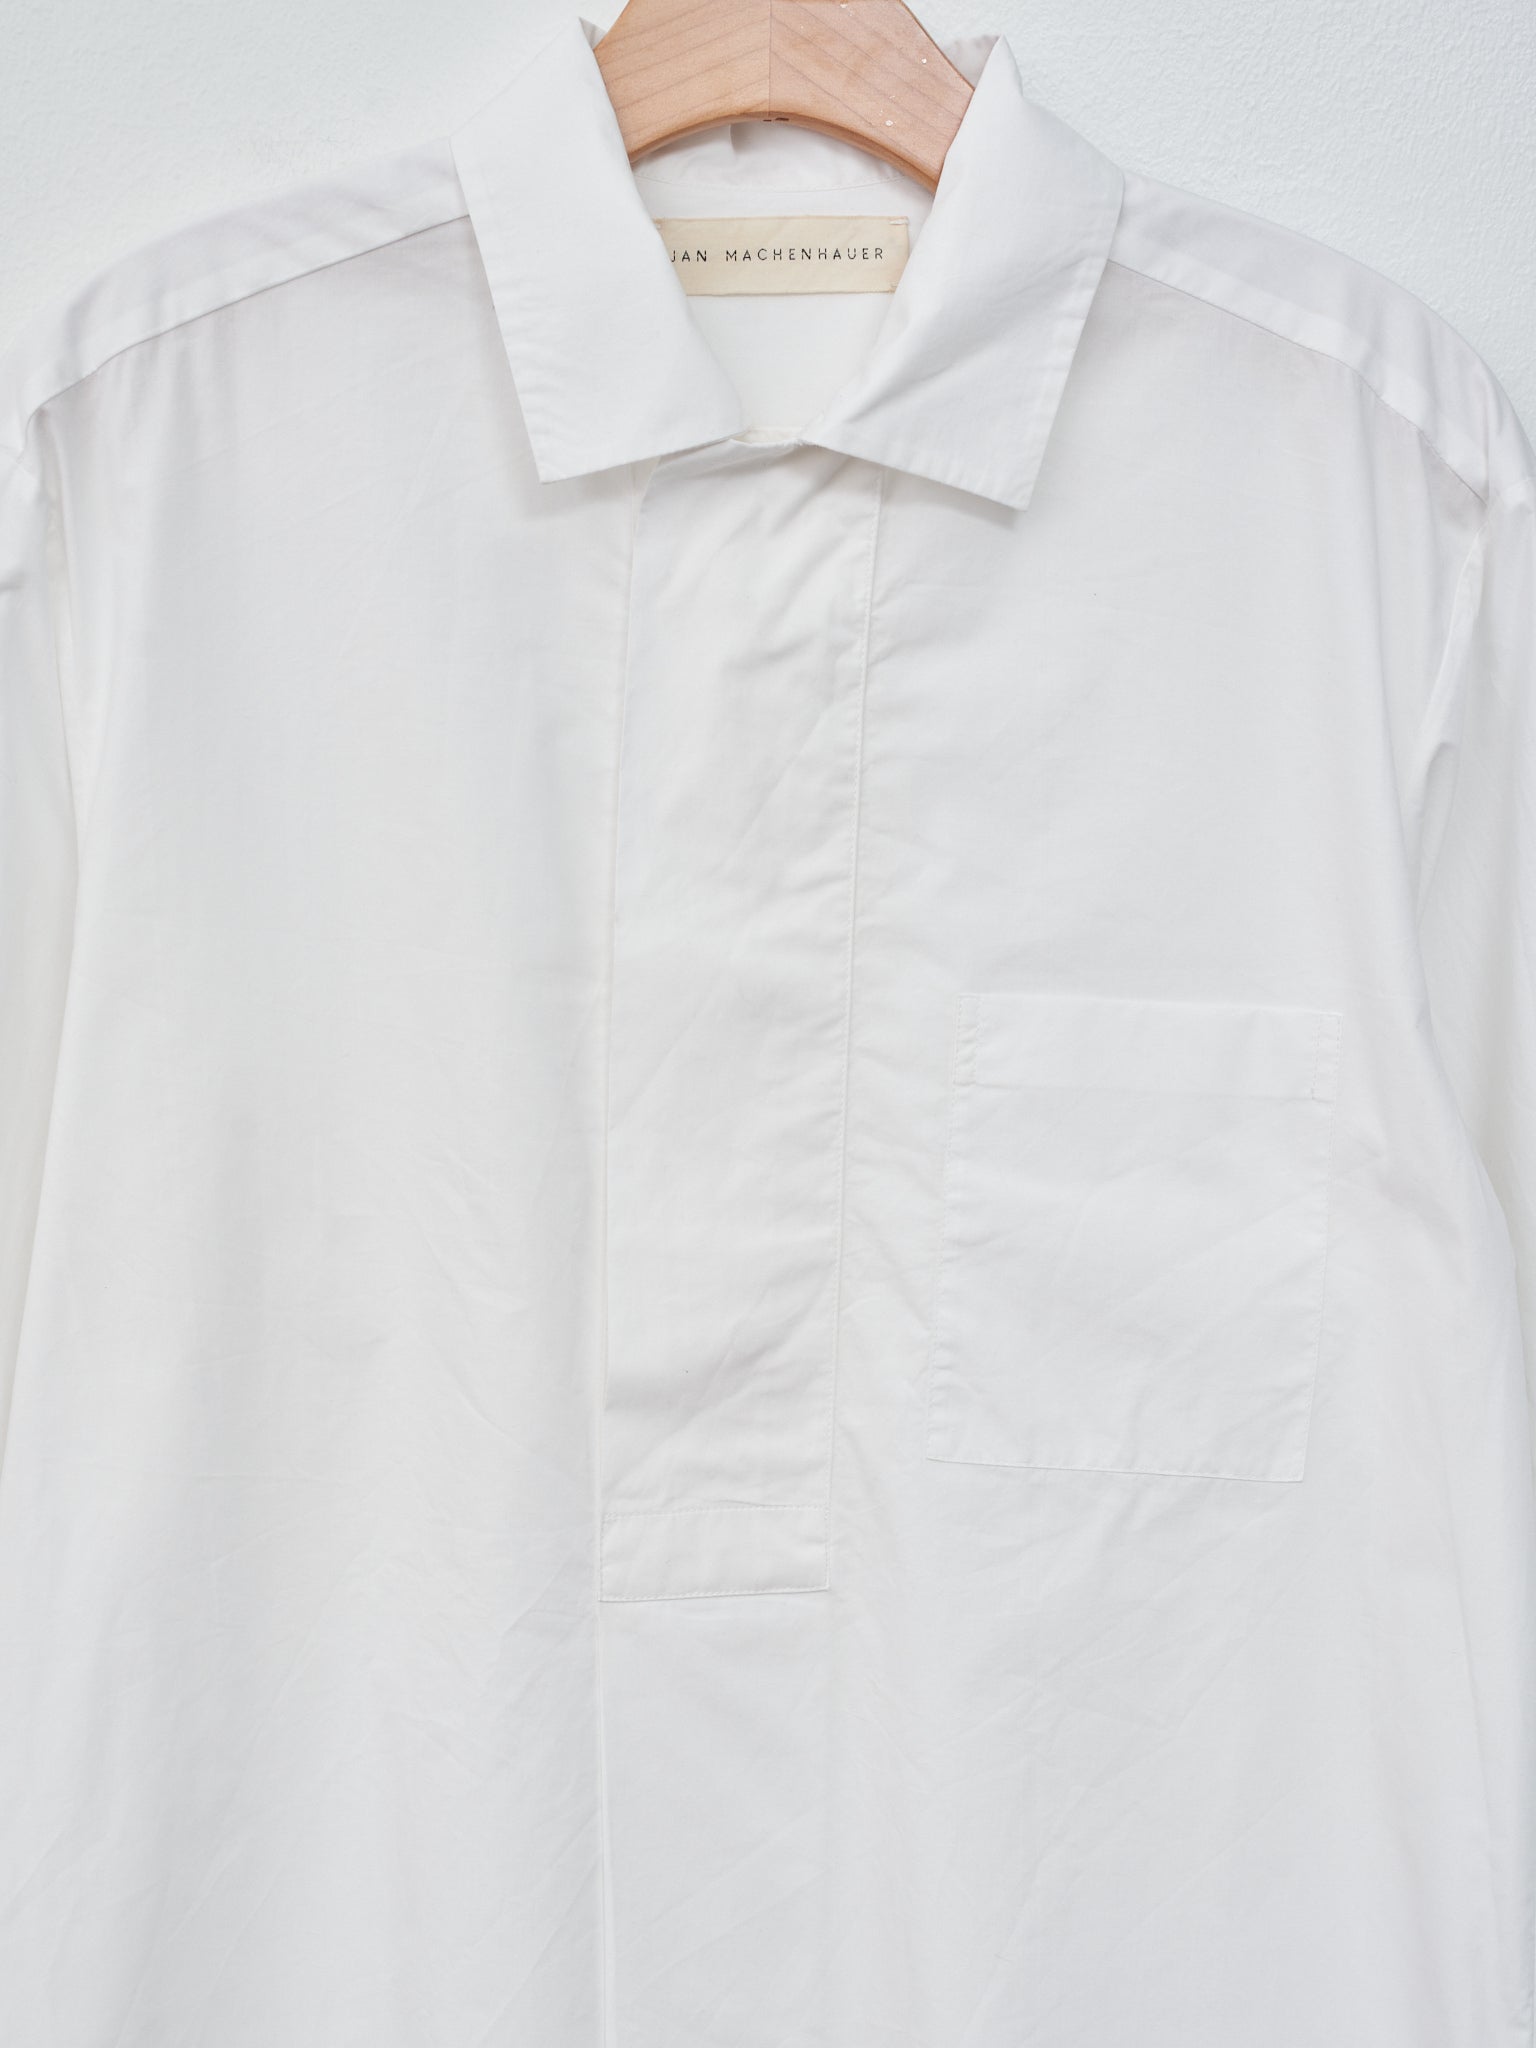 Namu Shop - Jan Machenhauer Pete Shirt - White